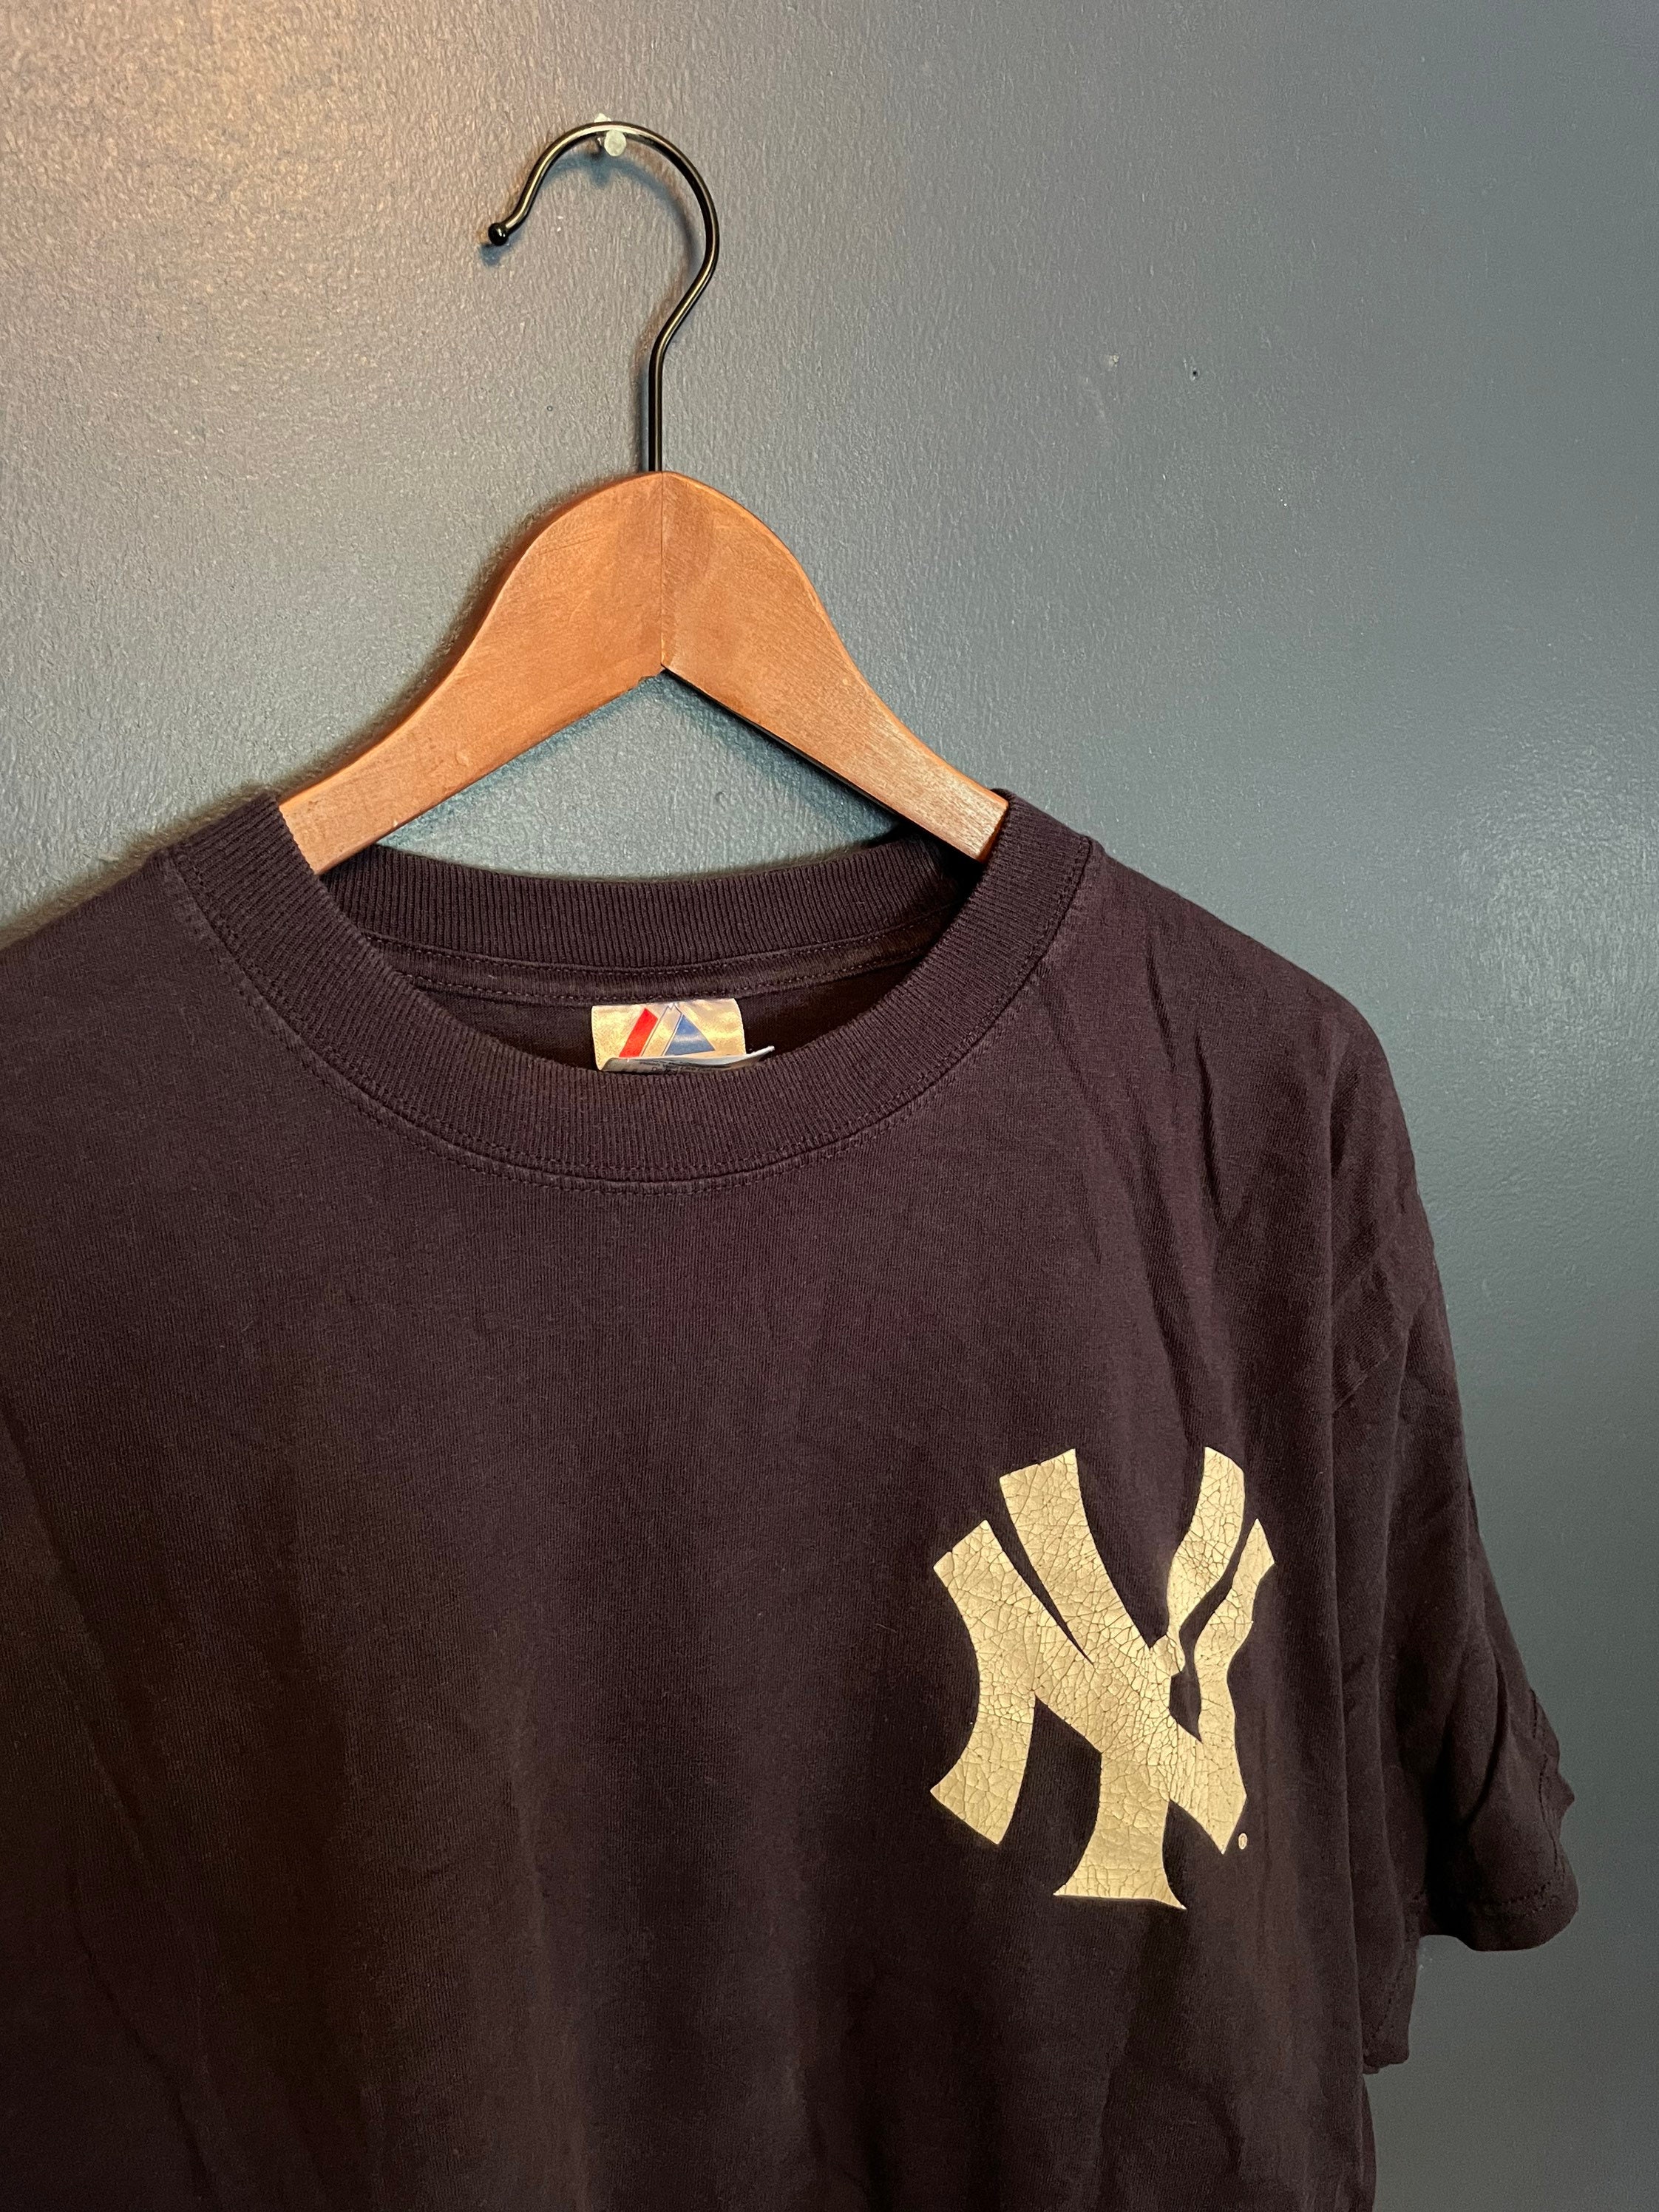 Vintage MLB (Joy Athletic) - New York Yankees The Greatest Roster T-Shirt  1998 Large – Vintage Club Clothing